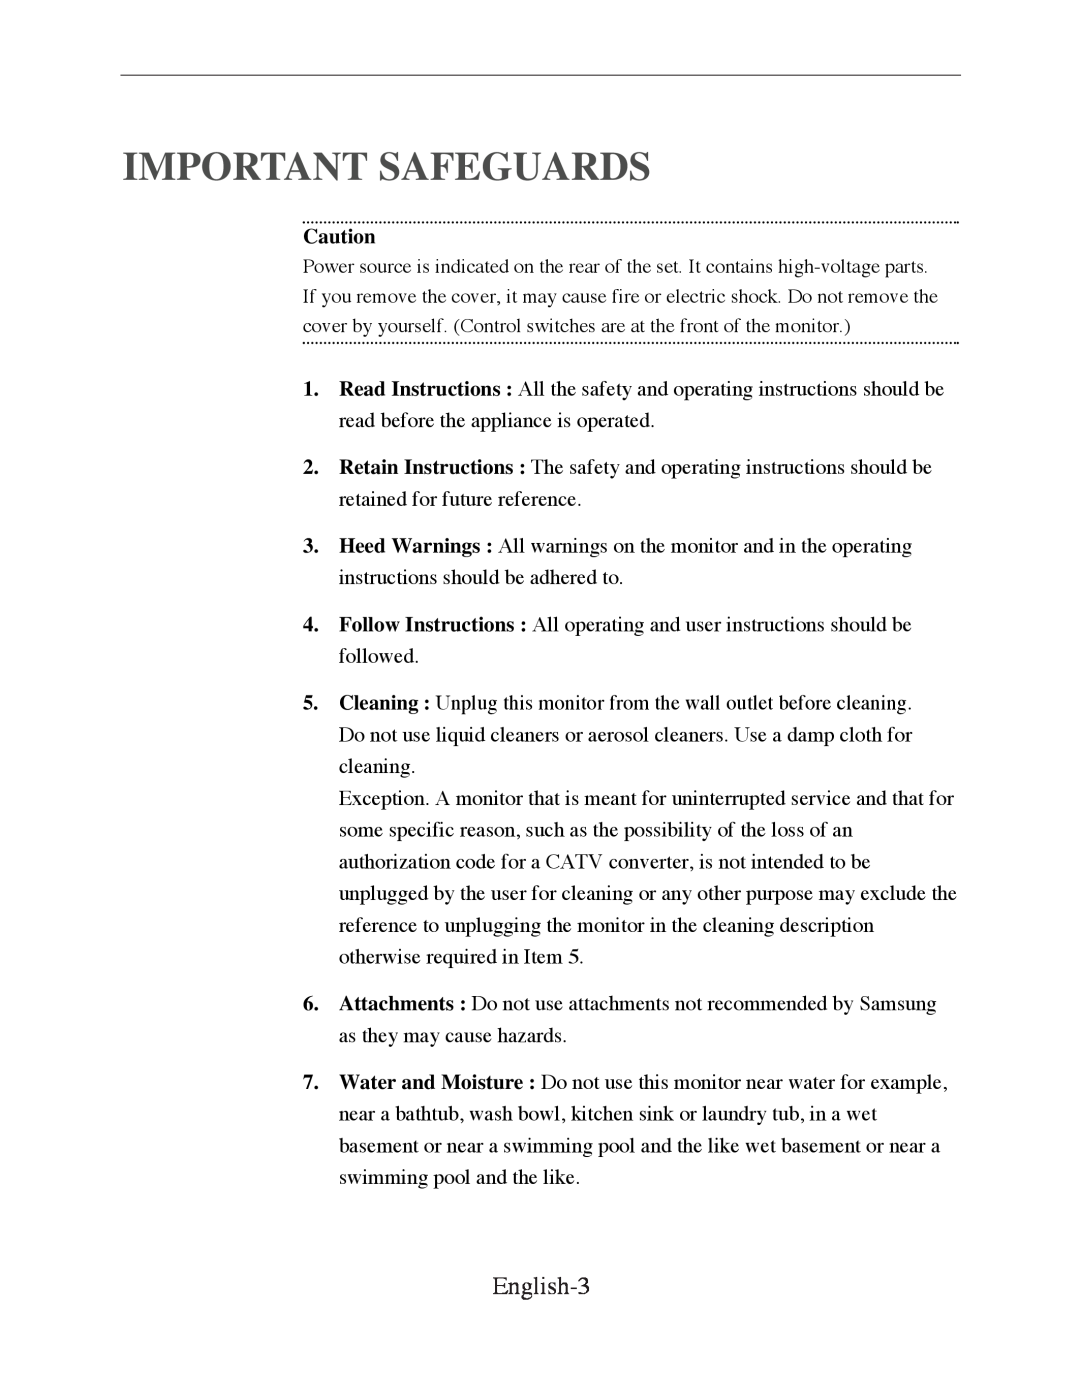 Samsung SMT-170P manual Important Safeguards, English-3 